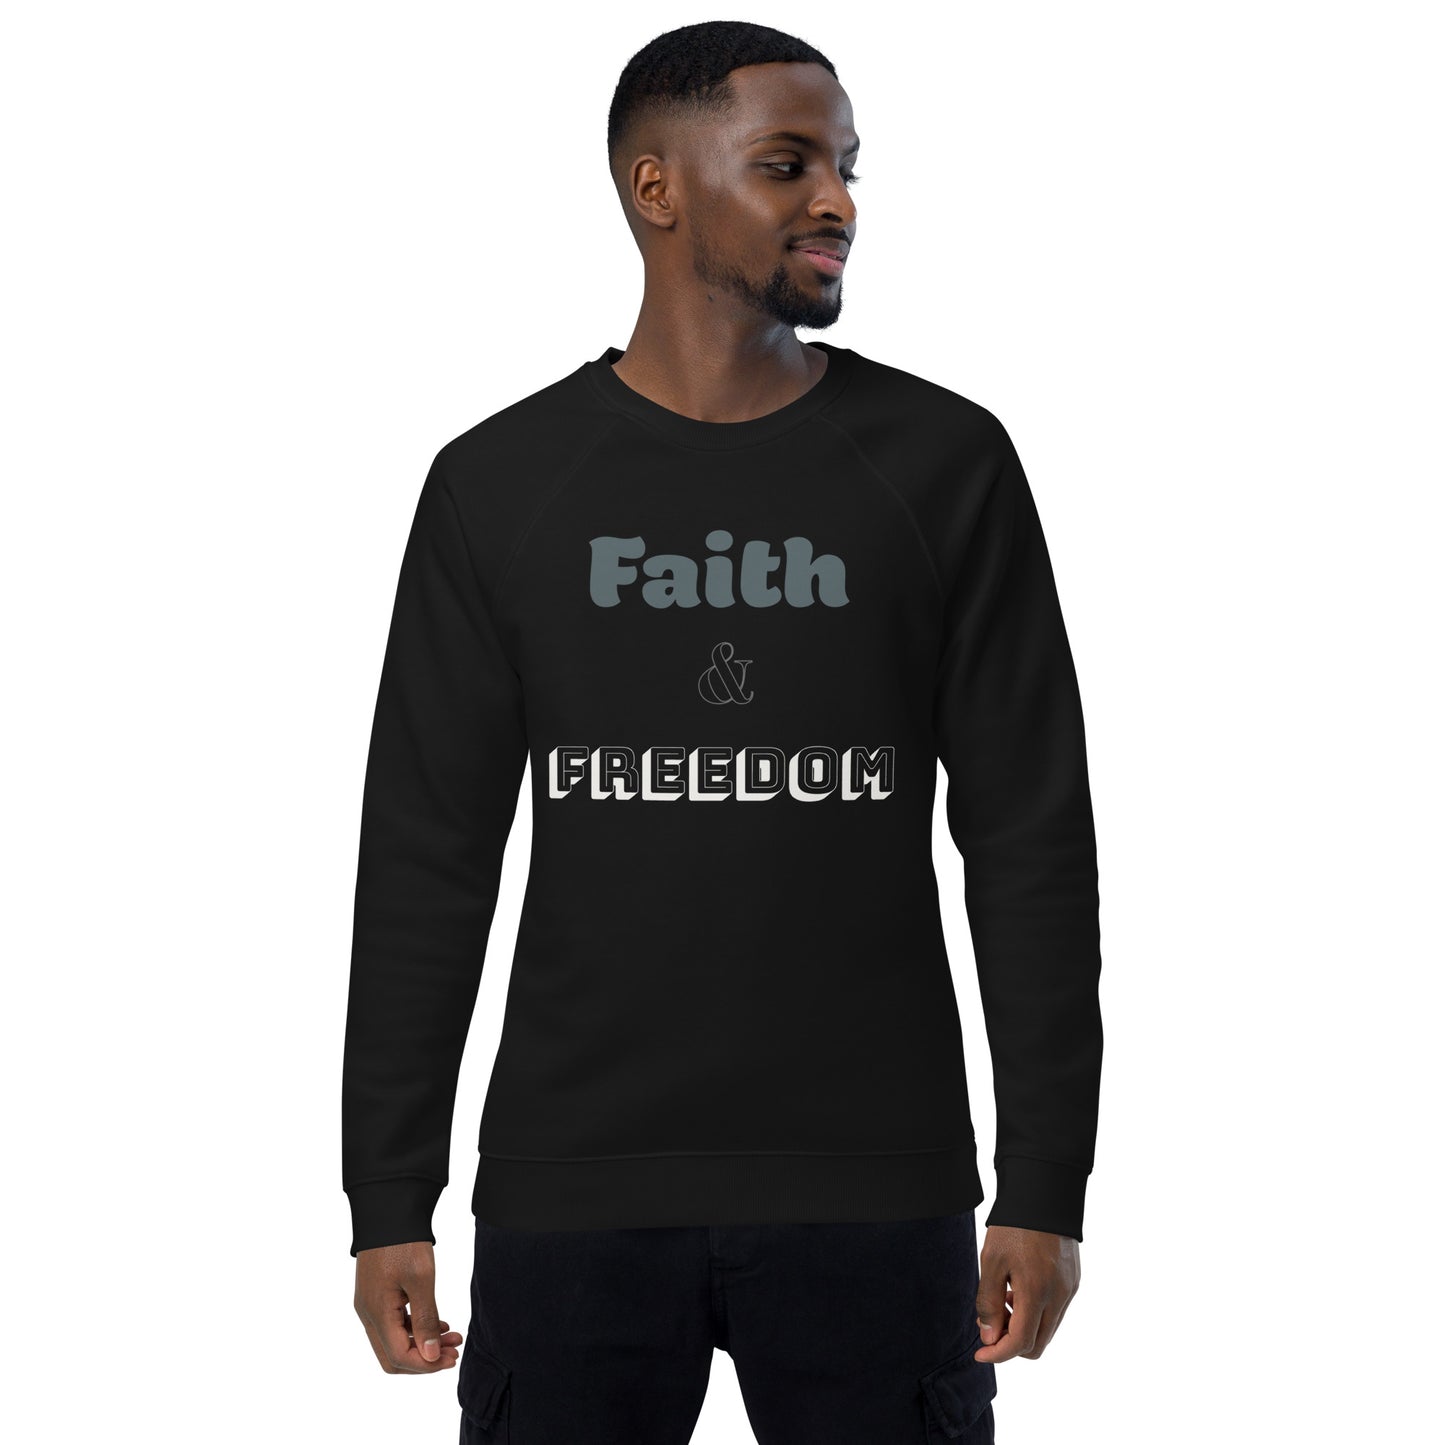 Freedom and faith sweatshirt